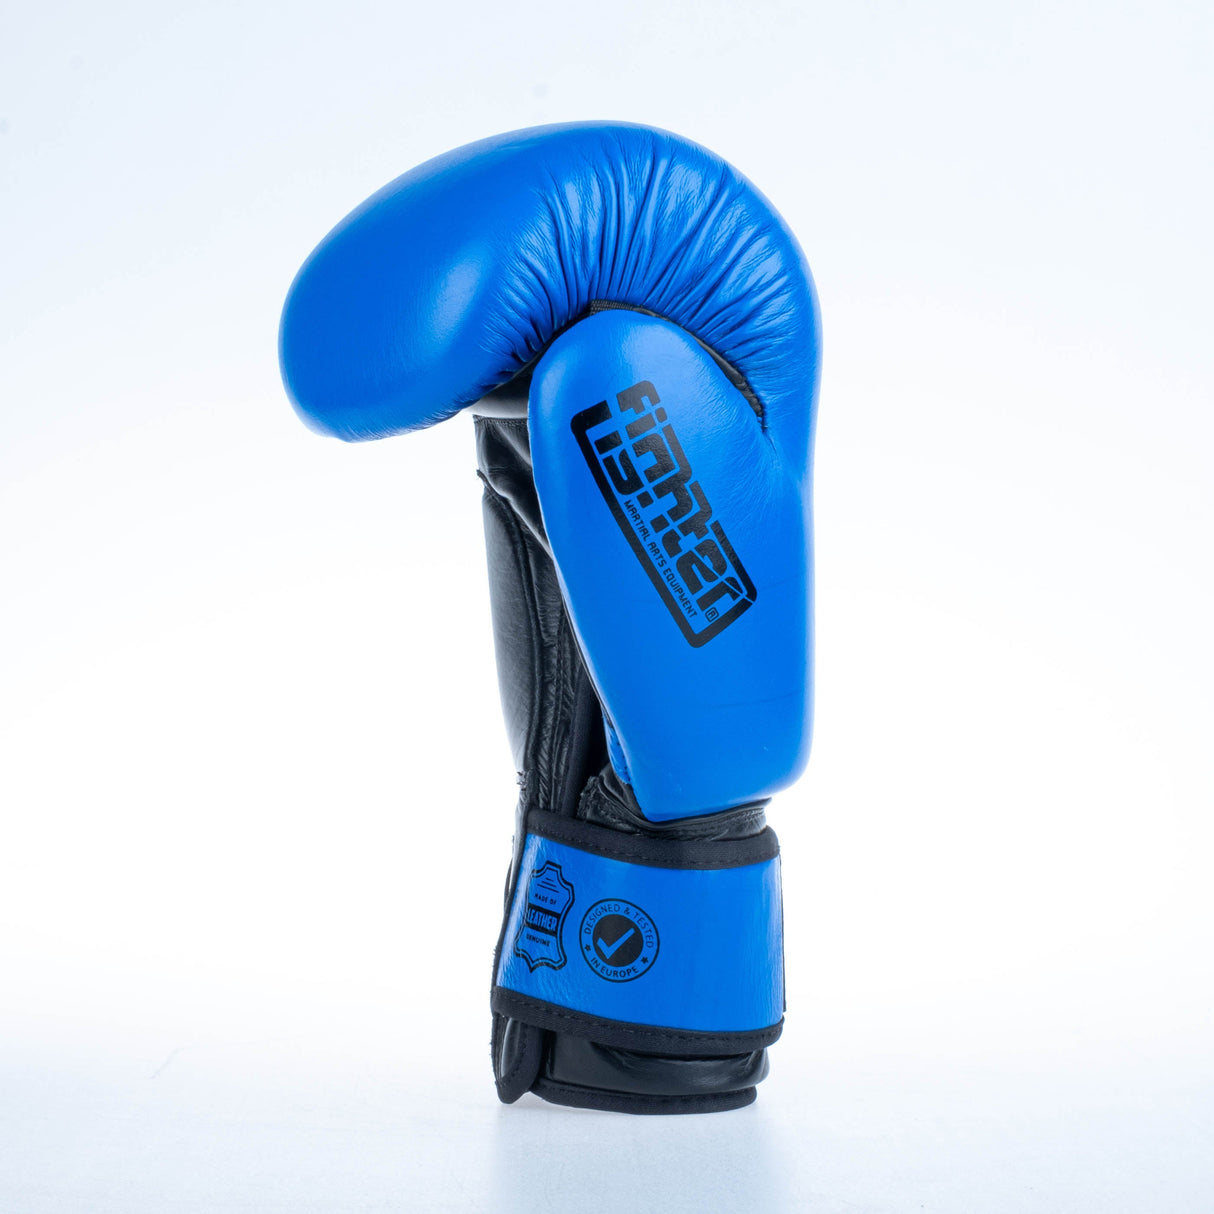 Gants de boxe Fighter ronds - bleu, 1376-RNDXB